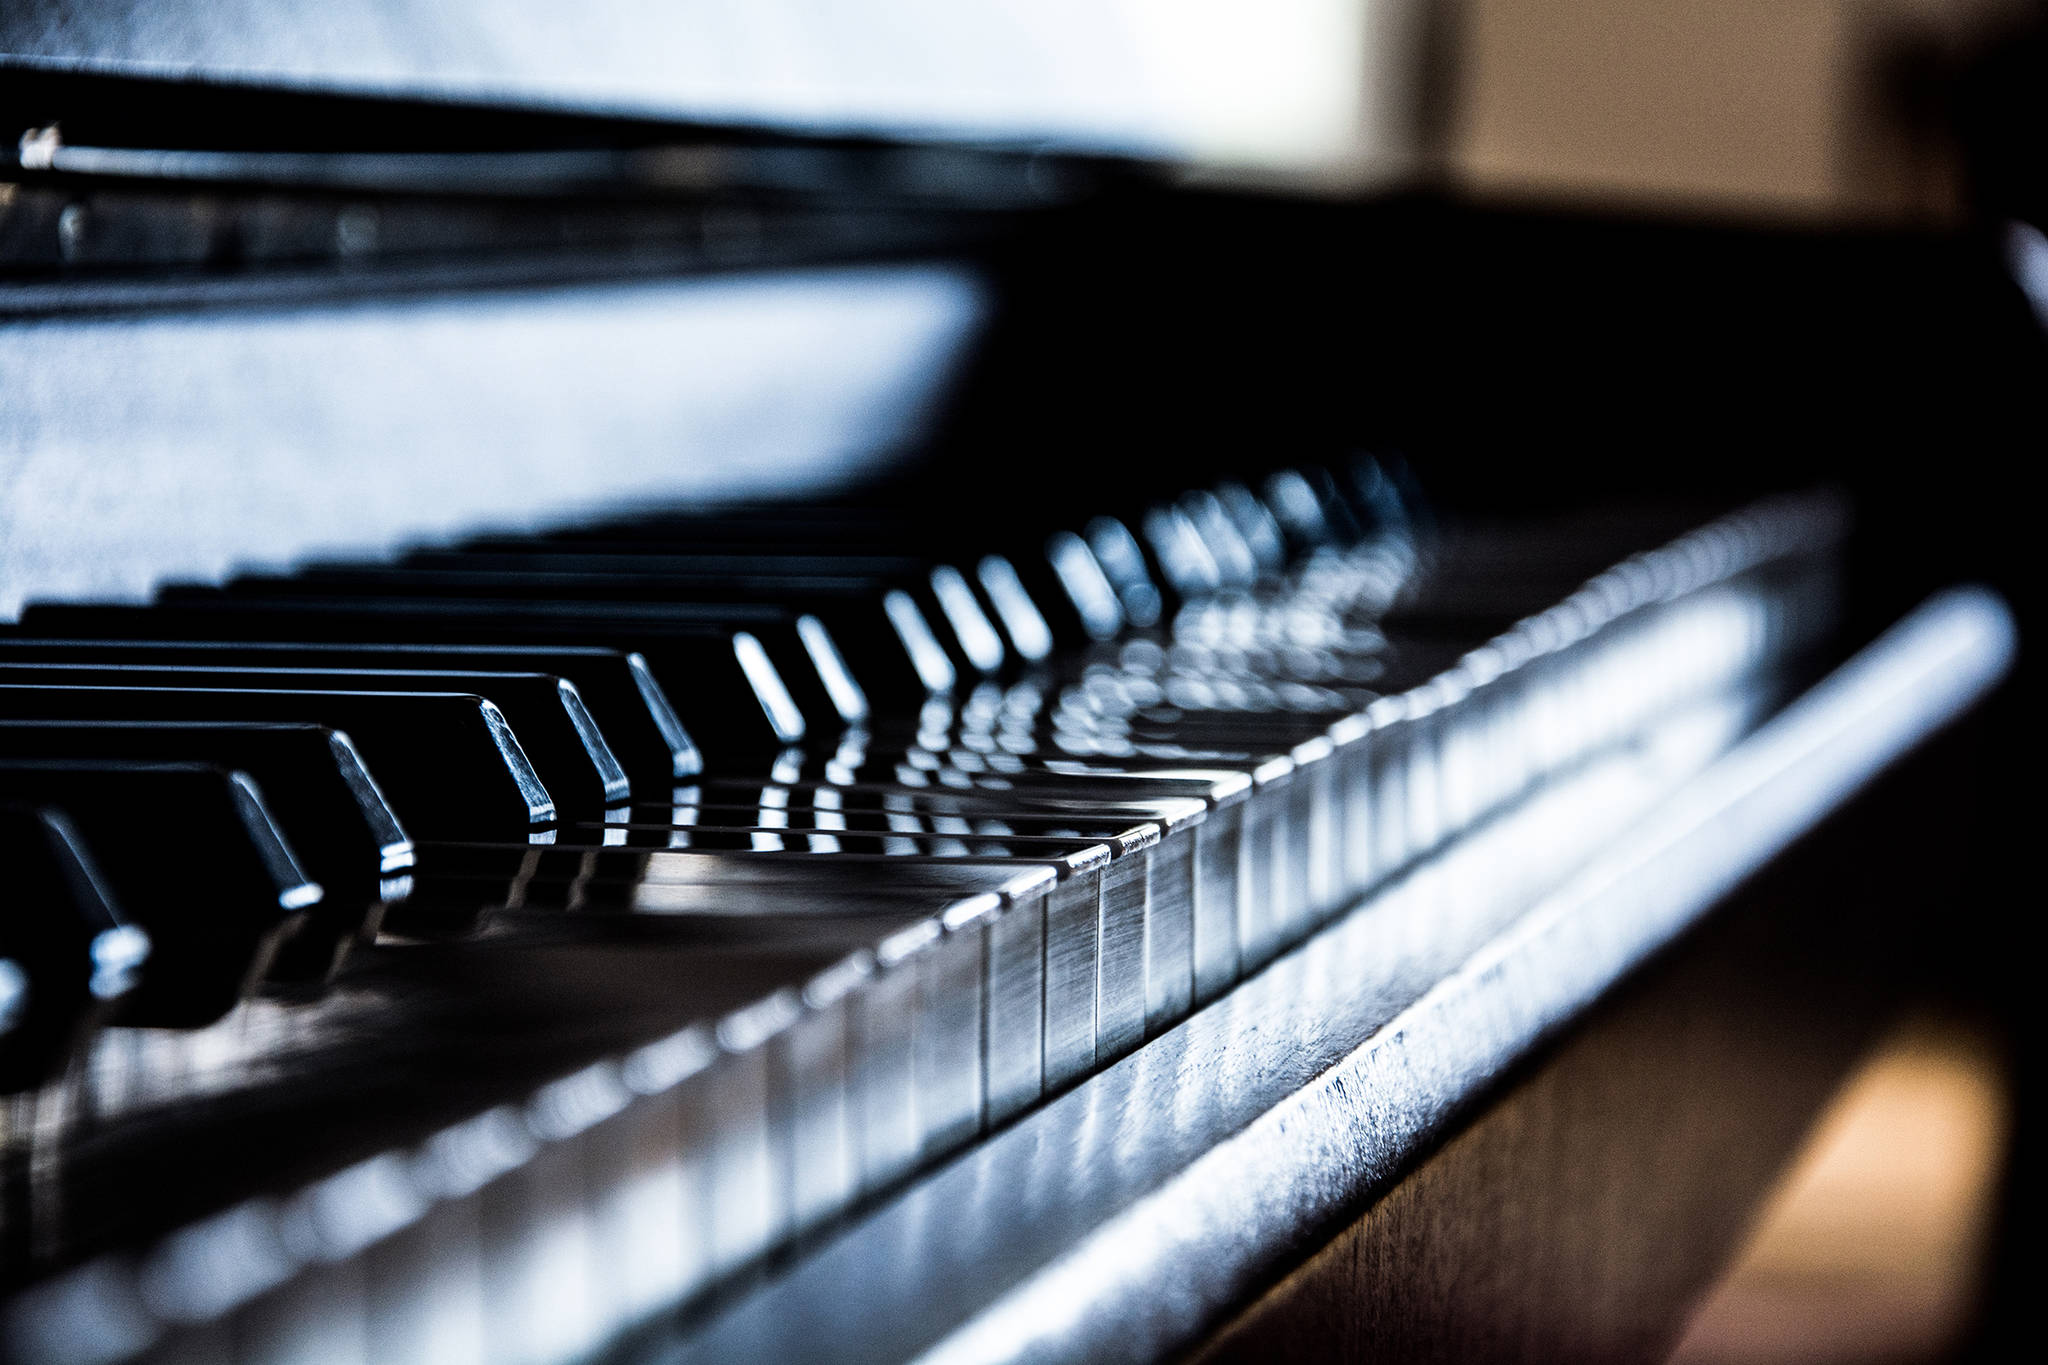 Piano concert series returns Friday